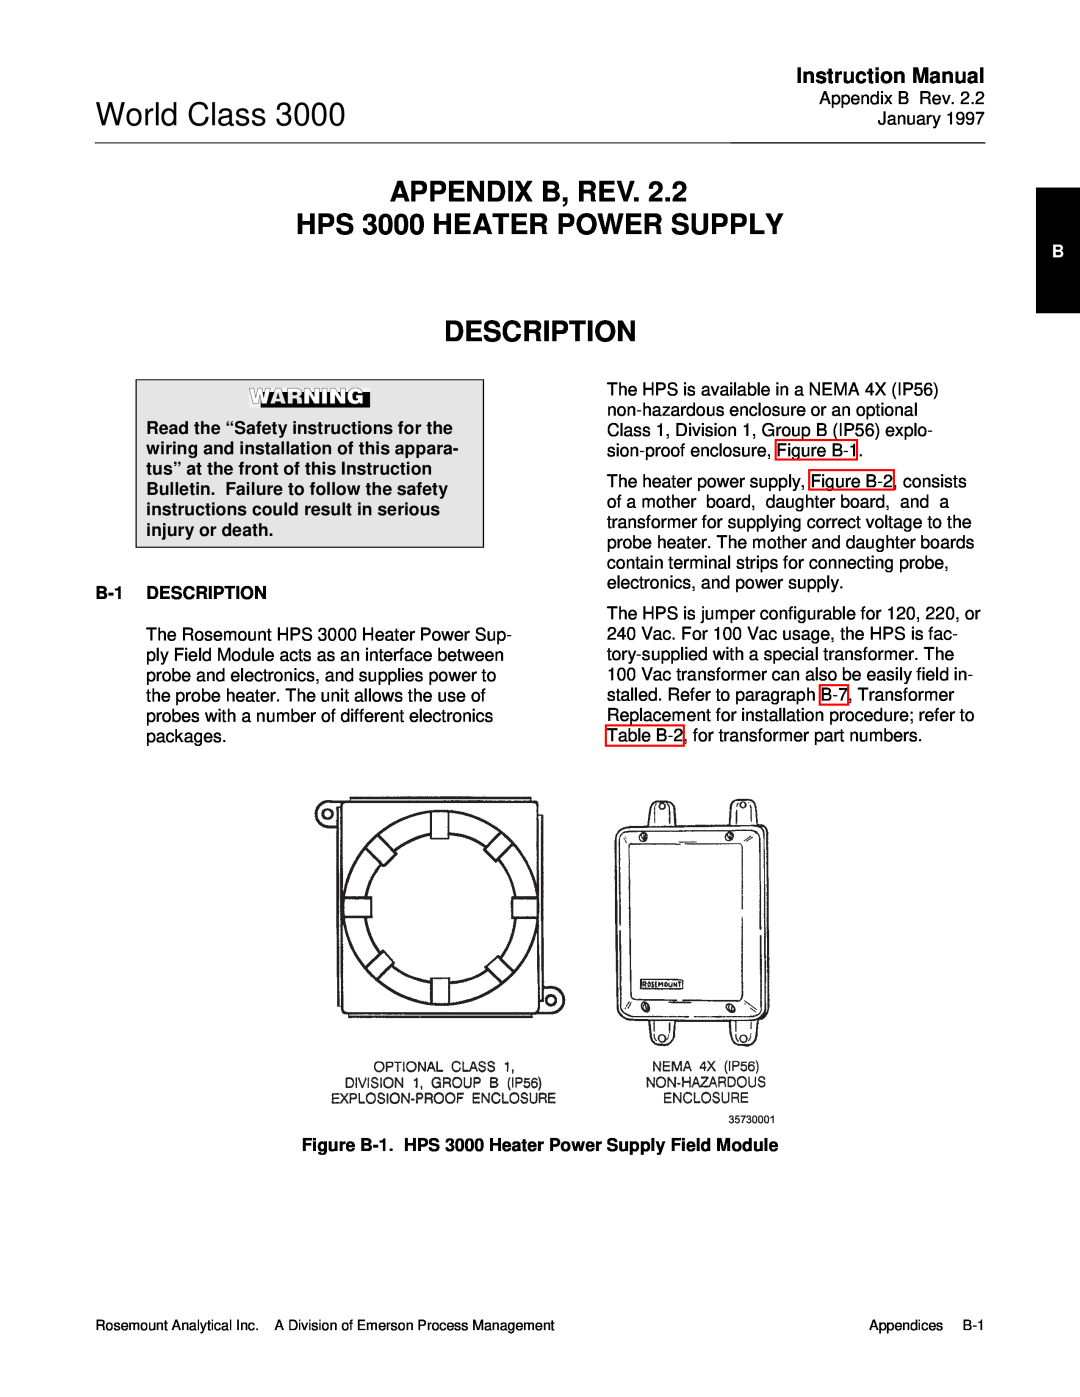 Emerson manual World Class, APPENDIX B, REV. HPS 3000 HEATER POWER SUPPLY, Description, B-1DESCRIPTION 